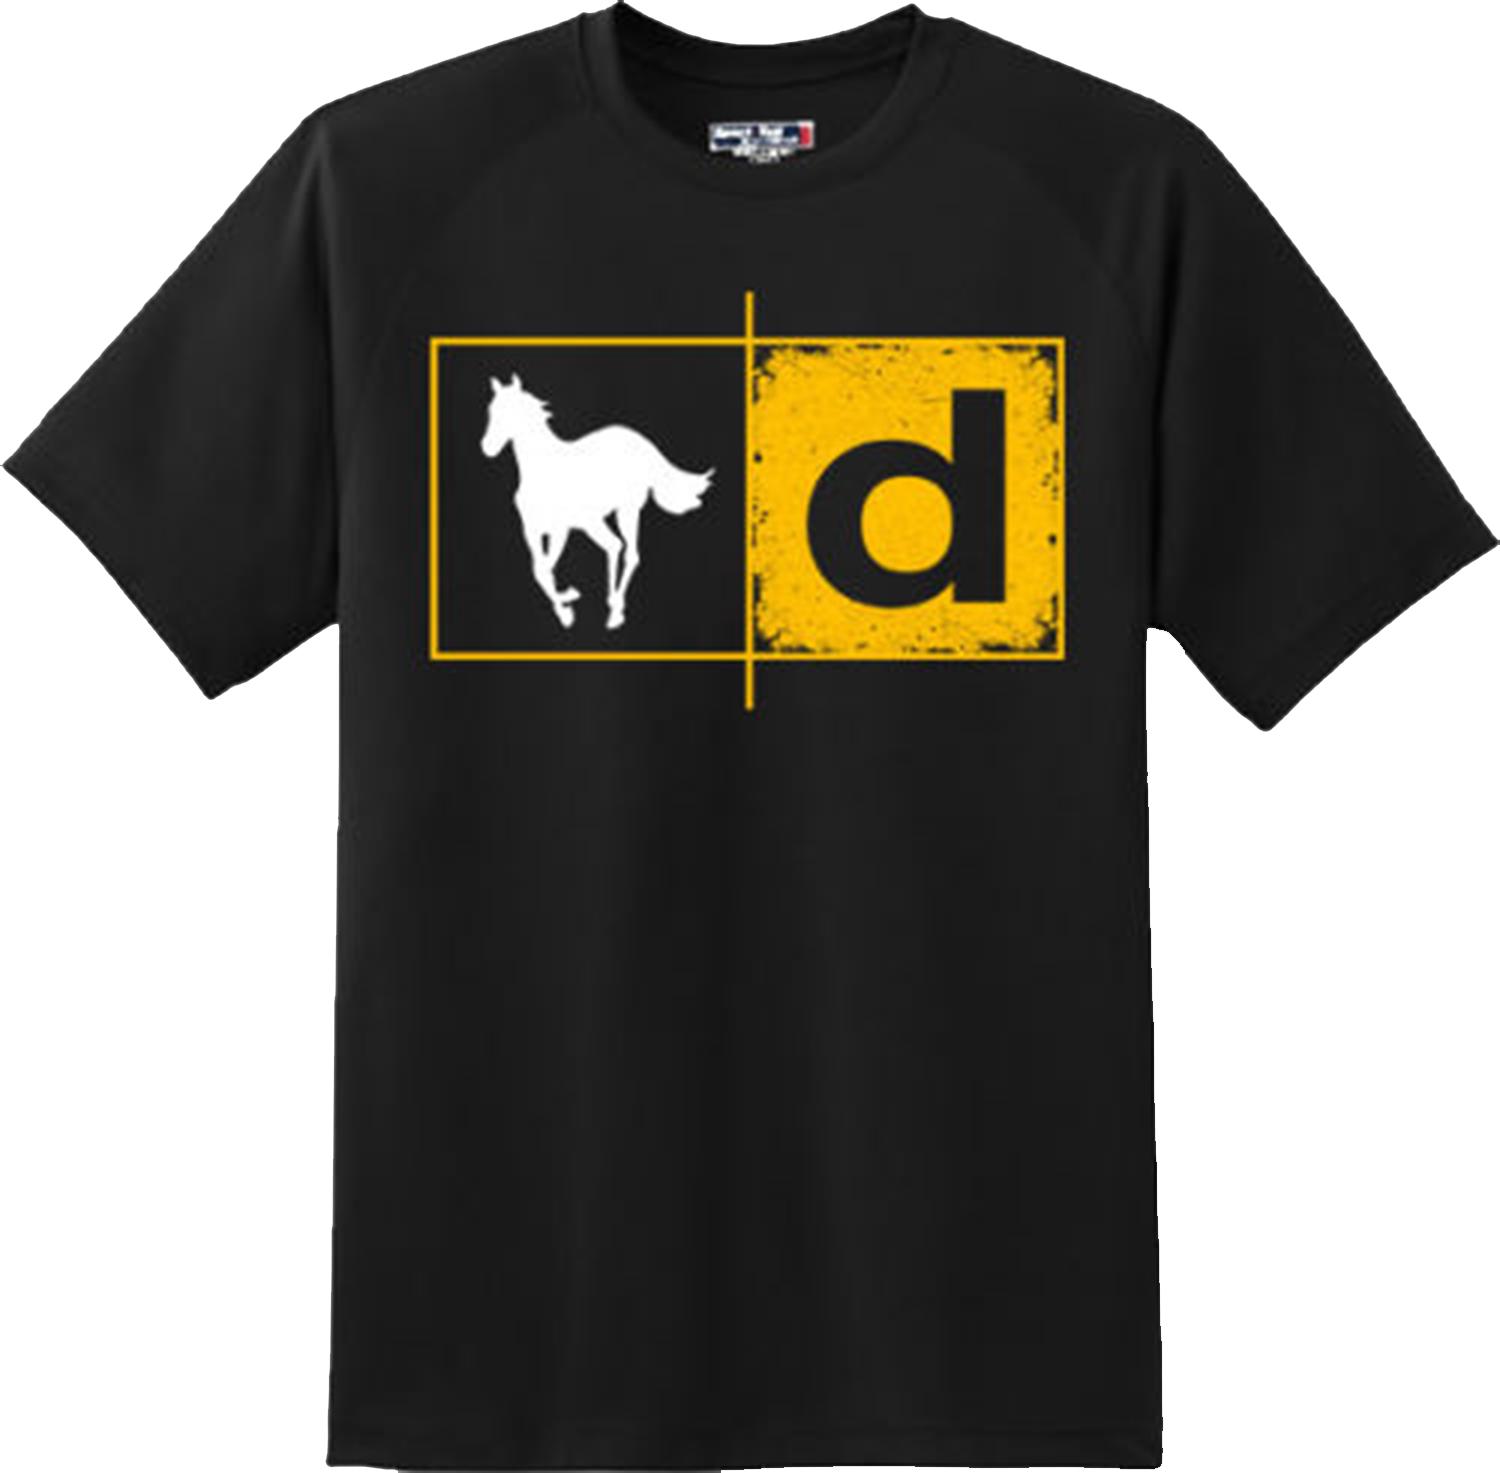 Deftones Hard Rock Band Classical Metal Music America T Shirt New Graphic Tee